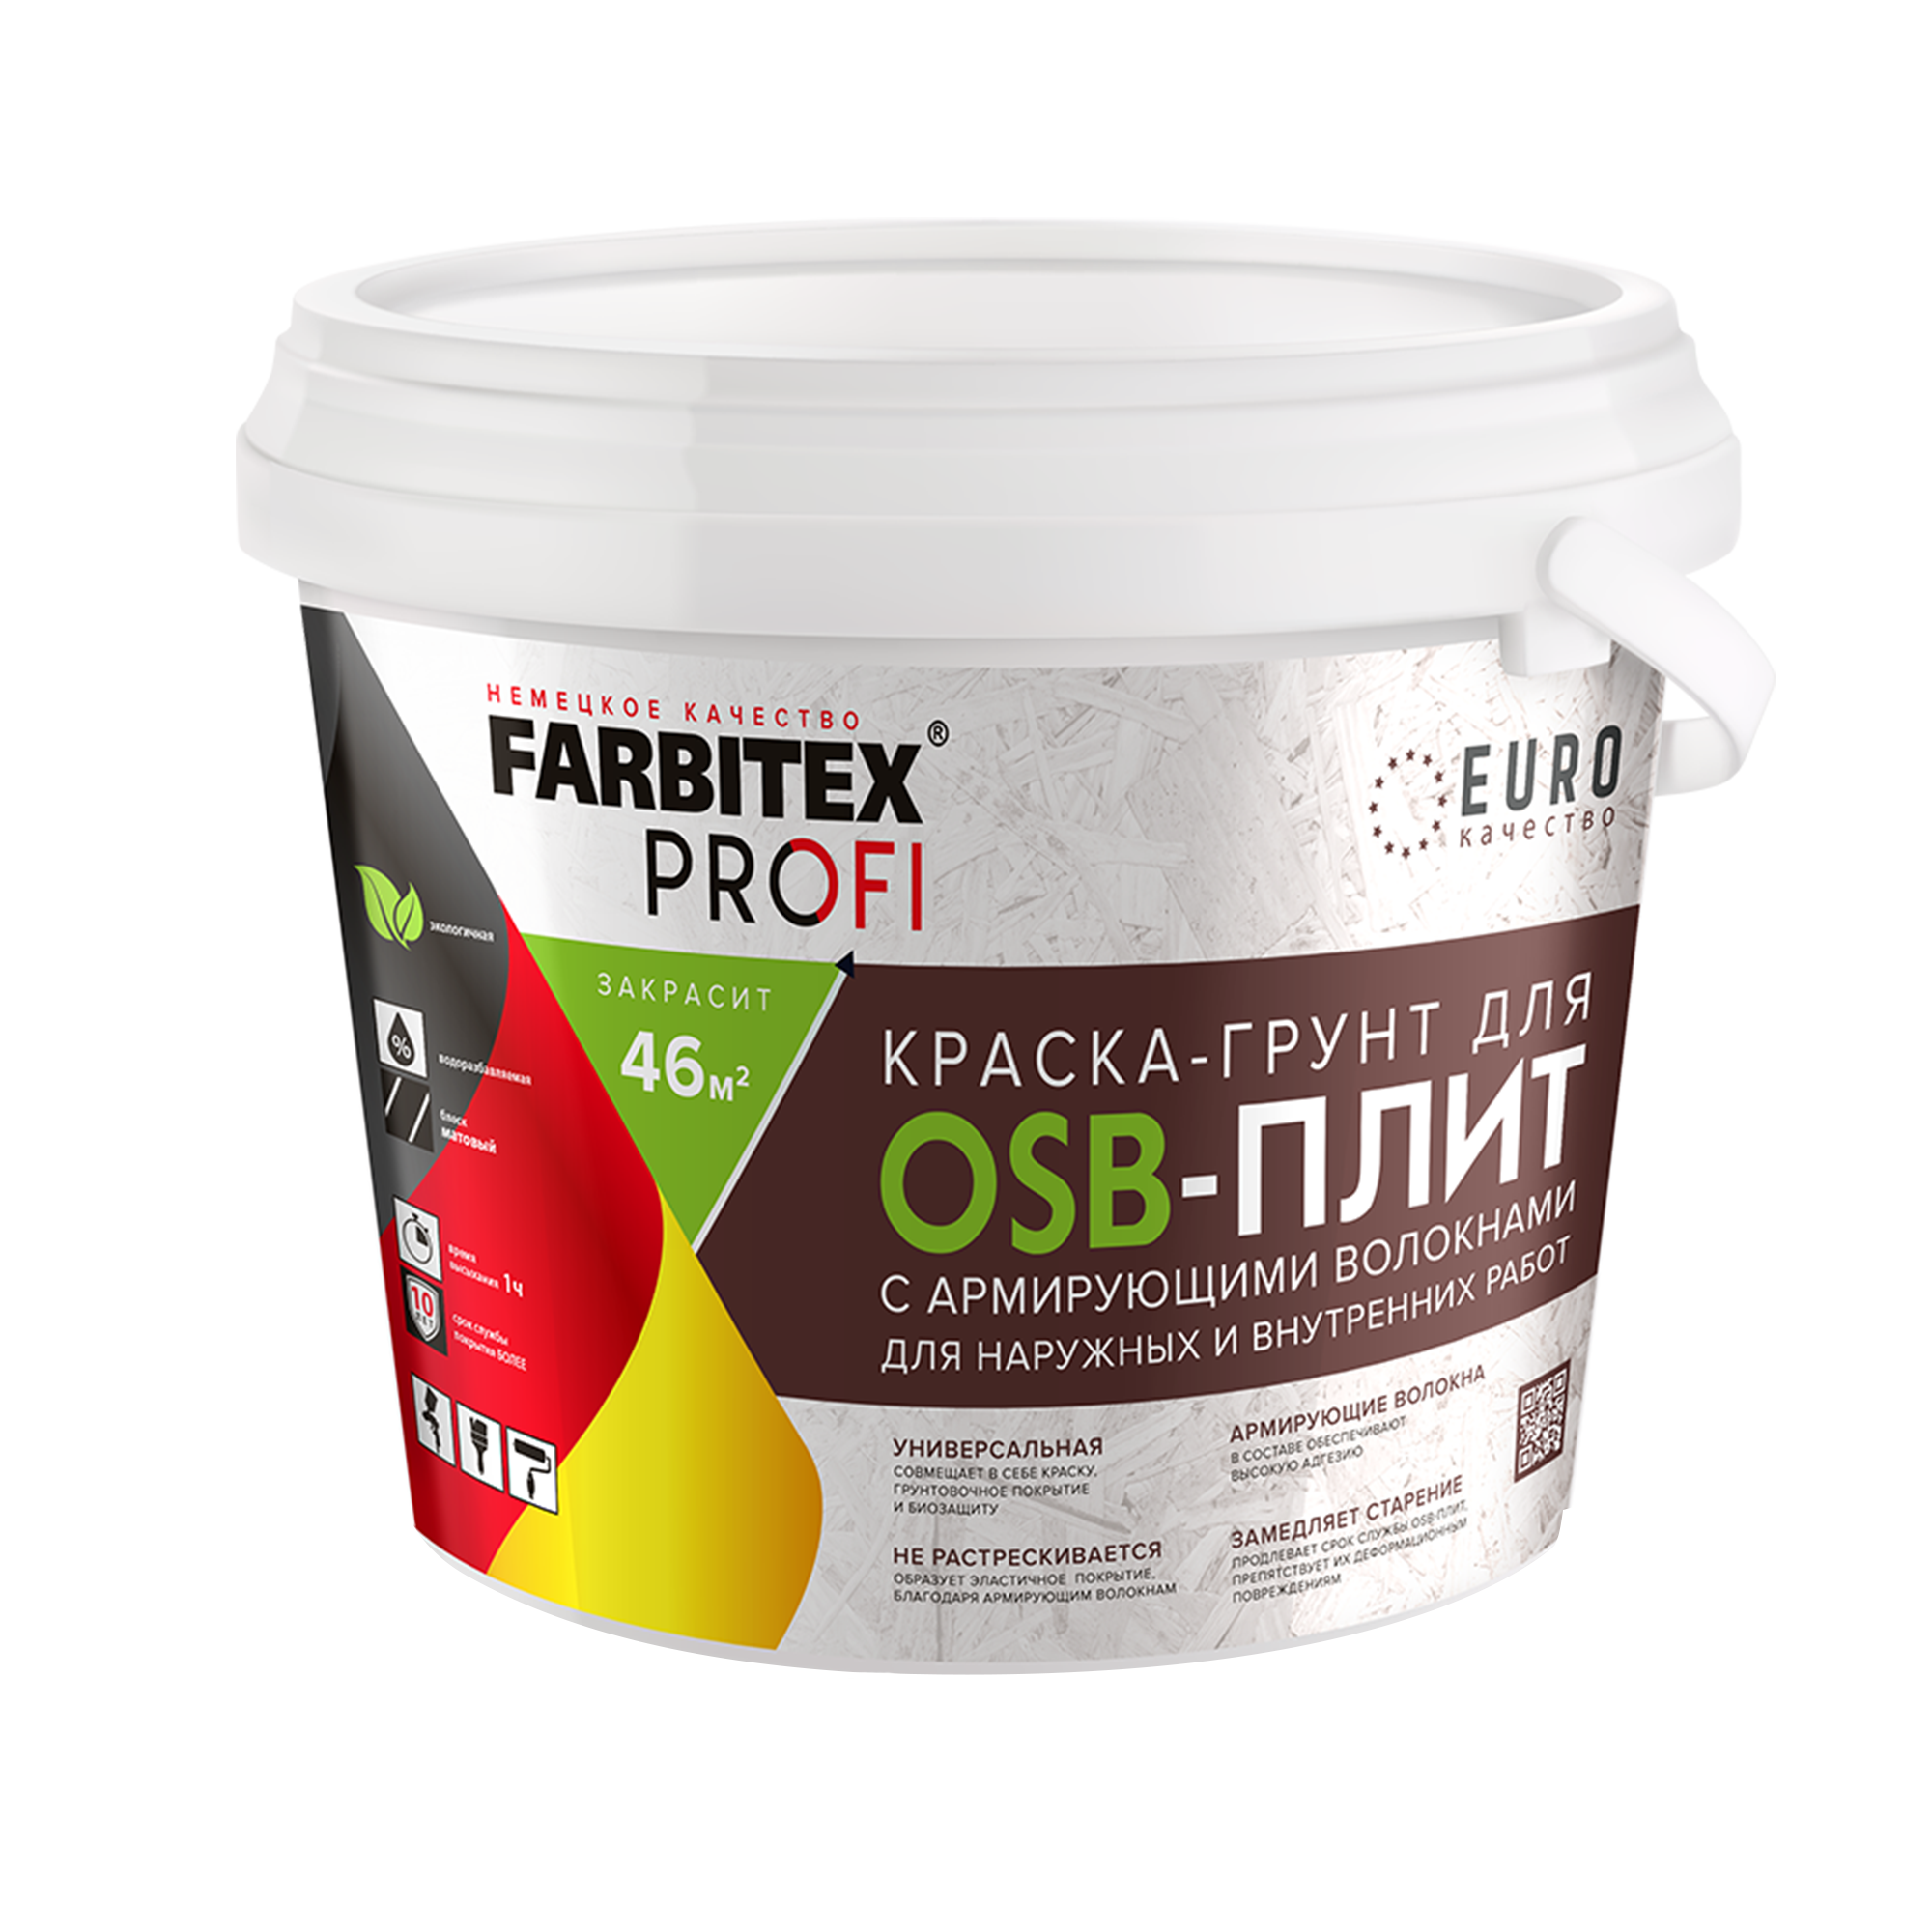 Краска-грунт FARBITEX PROFI Для OSB плит 3в1 армированная 14кг